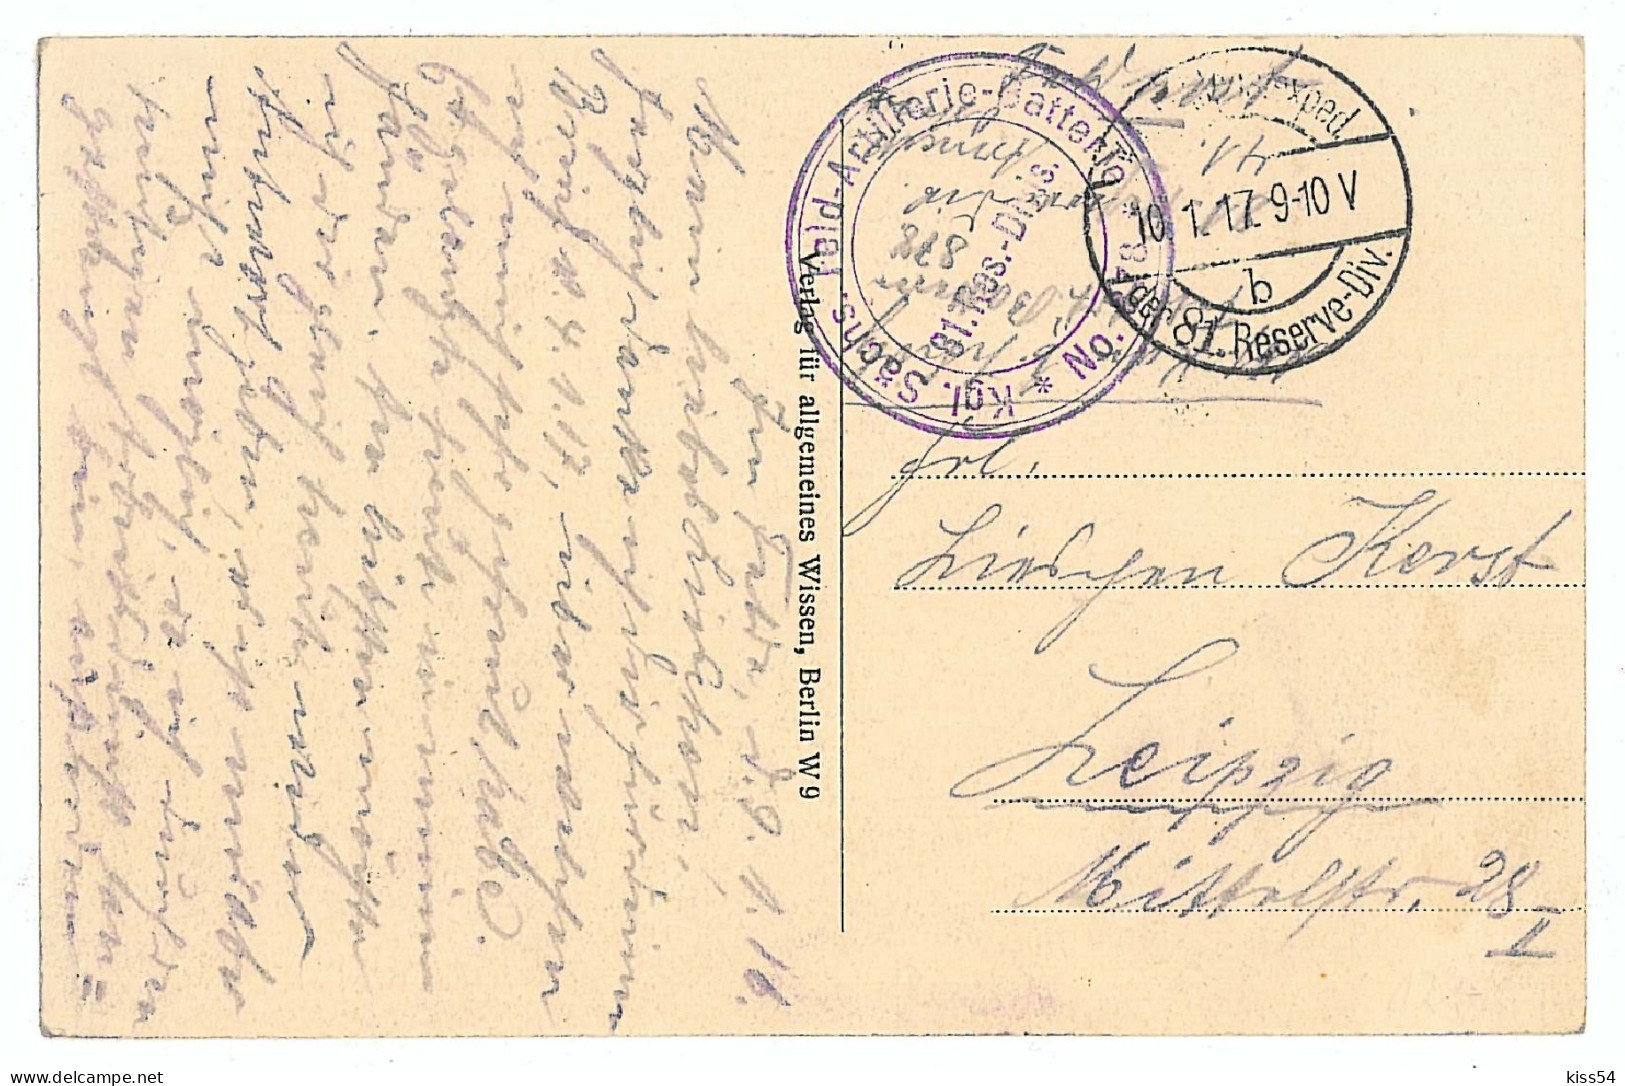 BL 10 - 8309 PINSK, Kiew Street - Old Postcard, CENSOR - Used - 1917 - Weißrussland